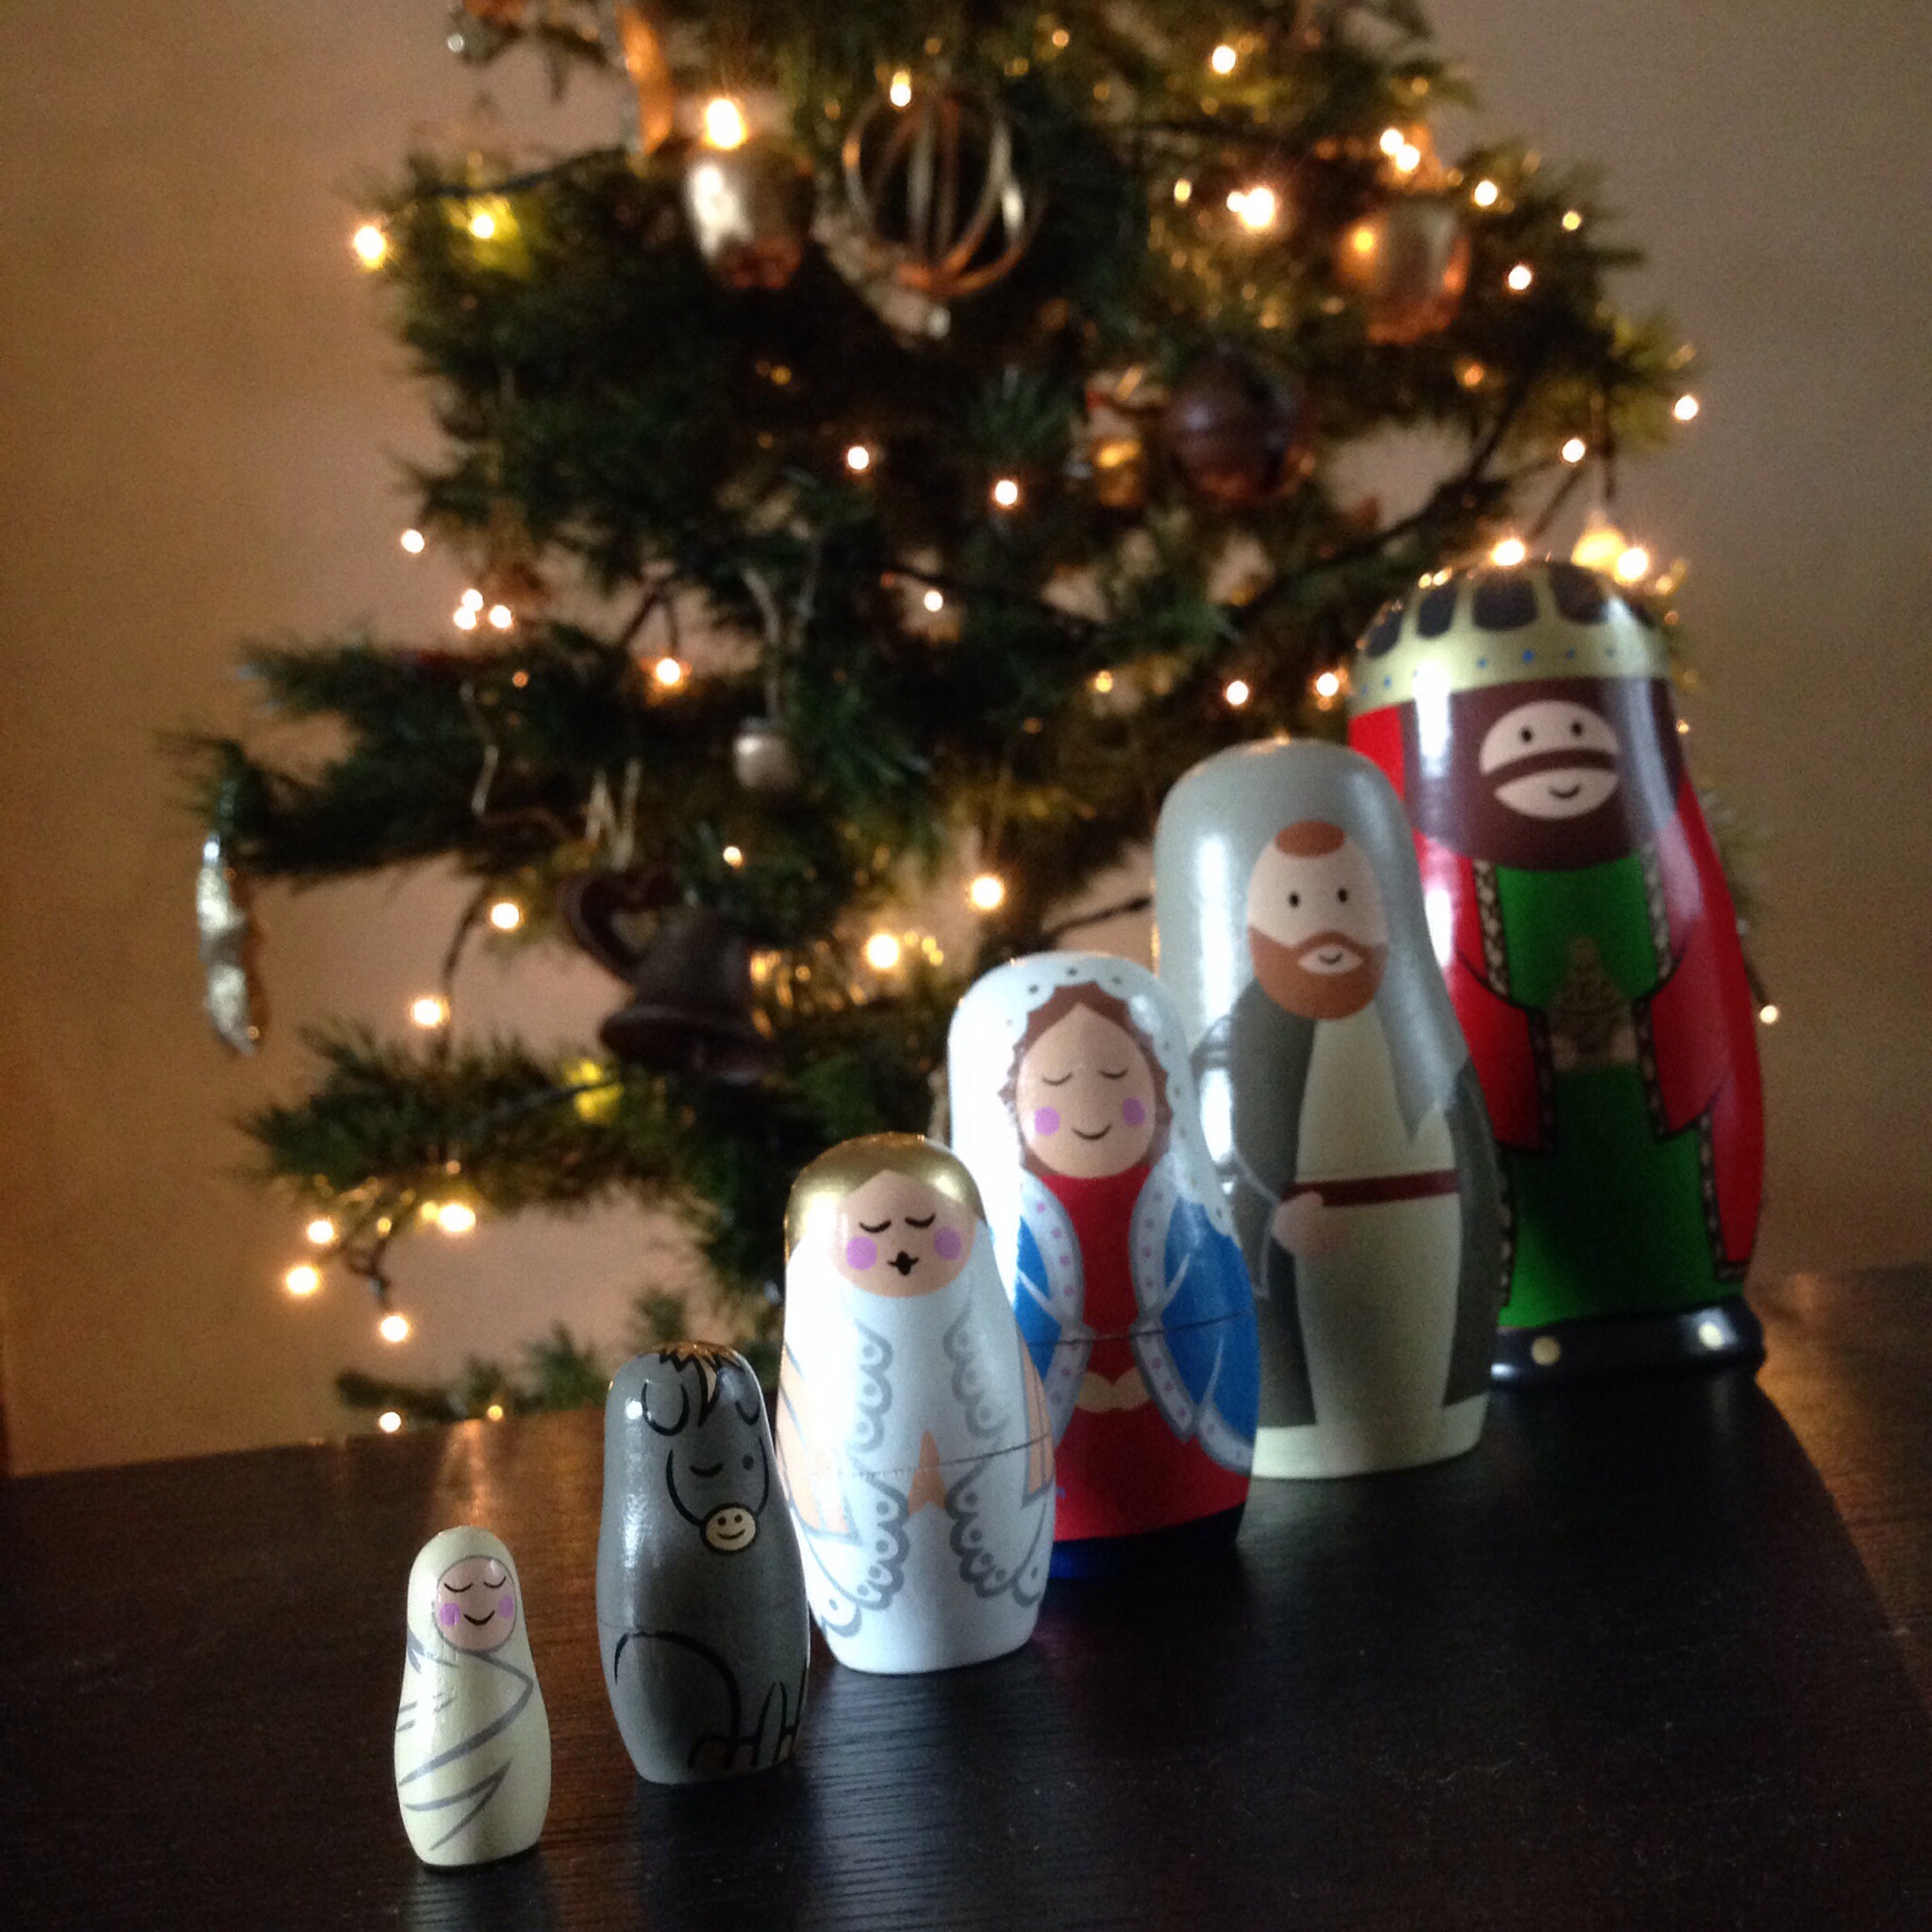 15 December – Christmas Nativities